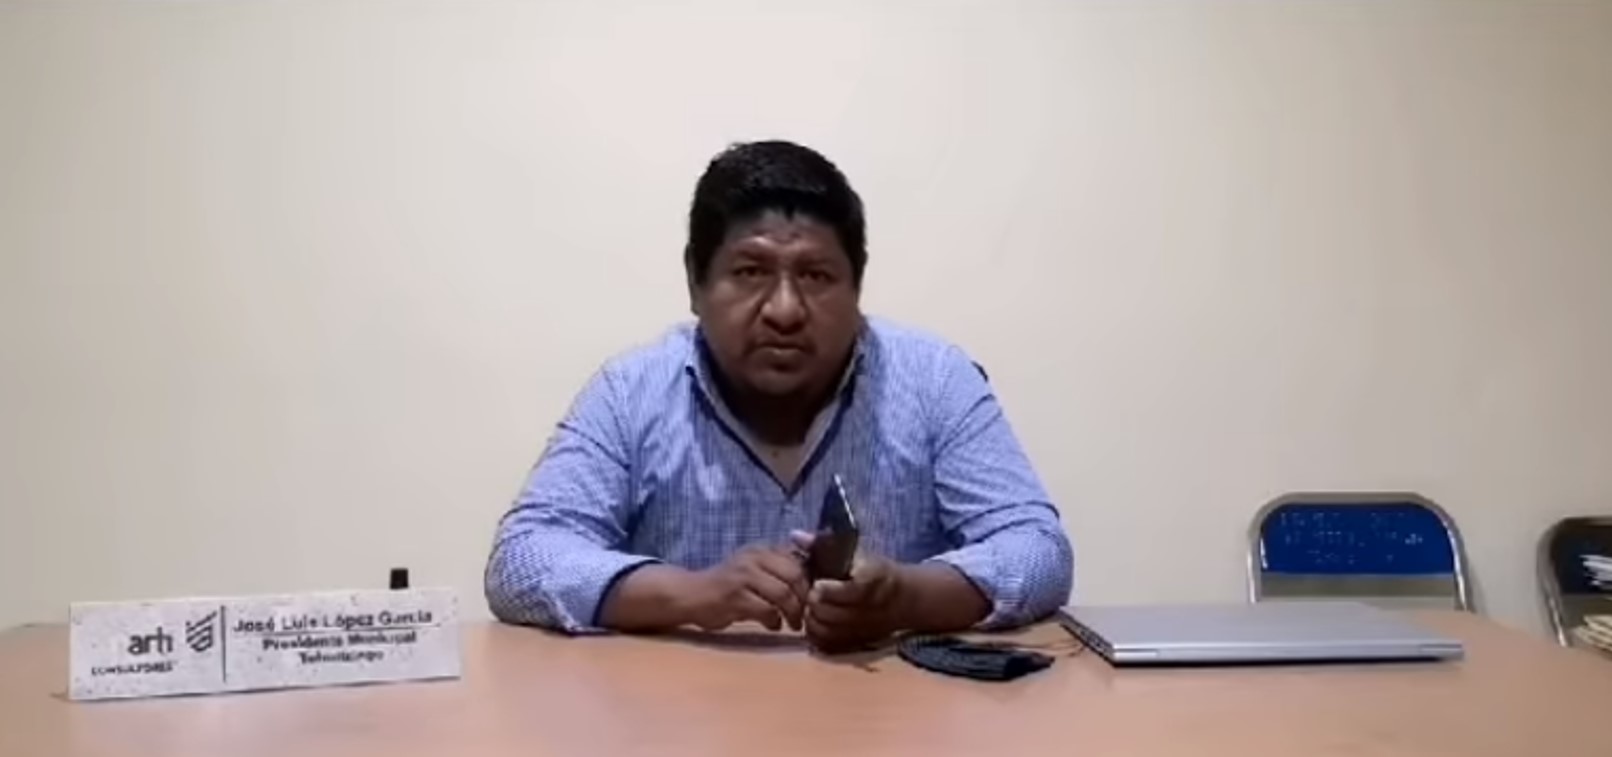 Muere director de seguridad pública de Tehuitzingo